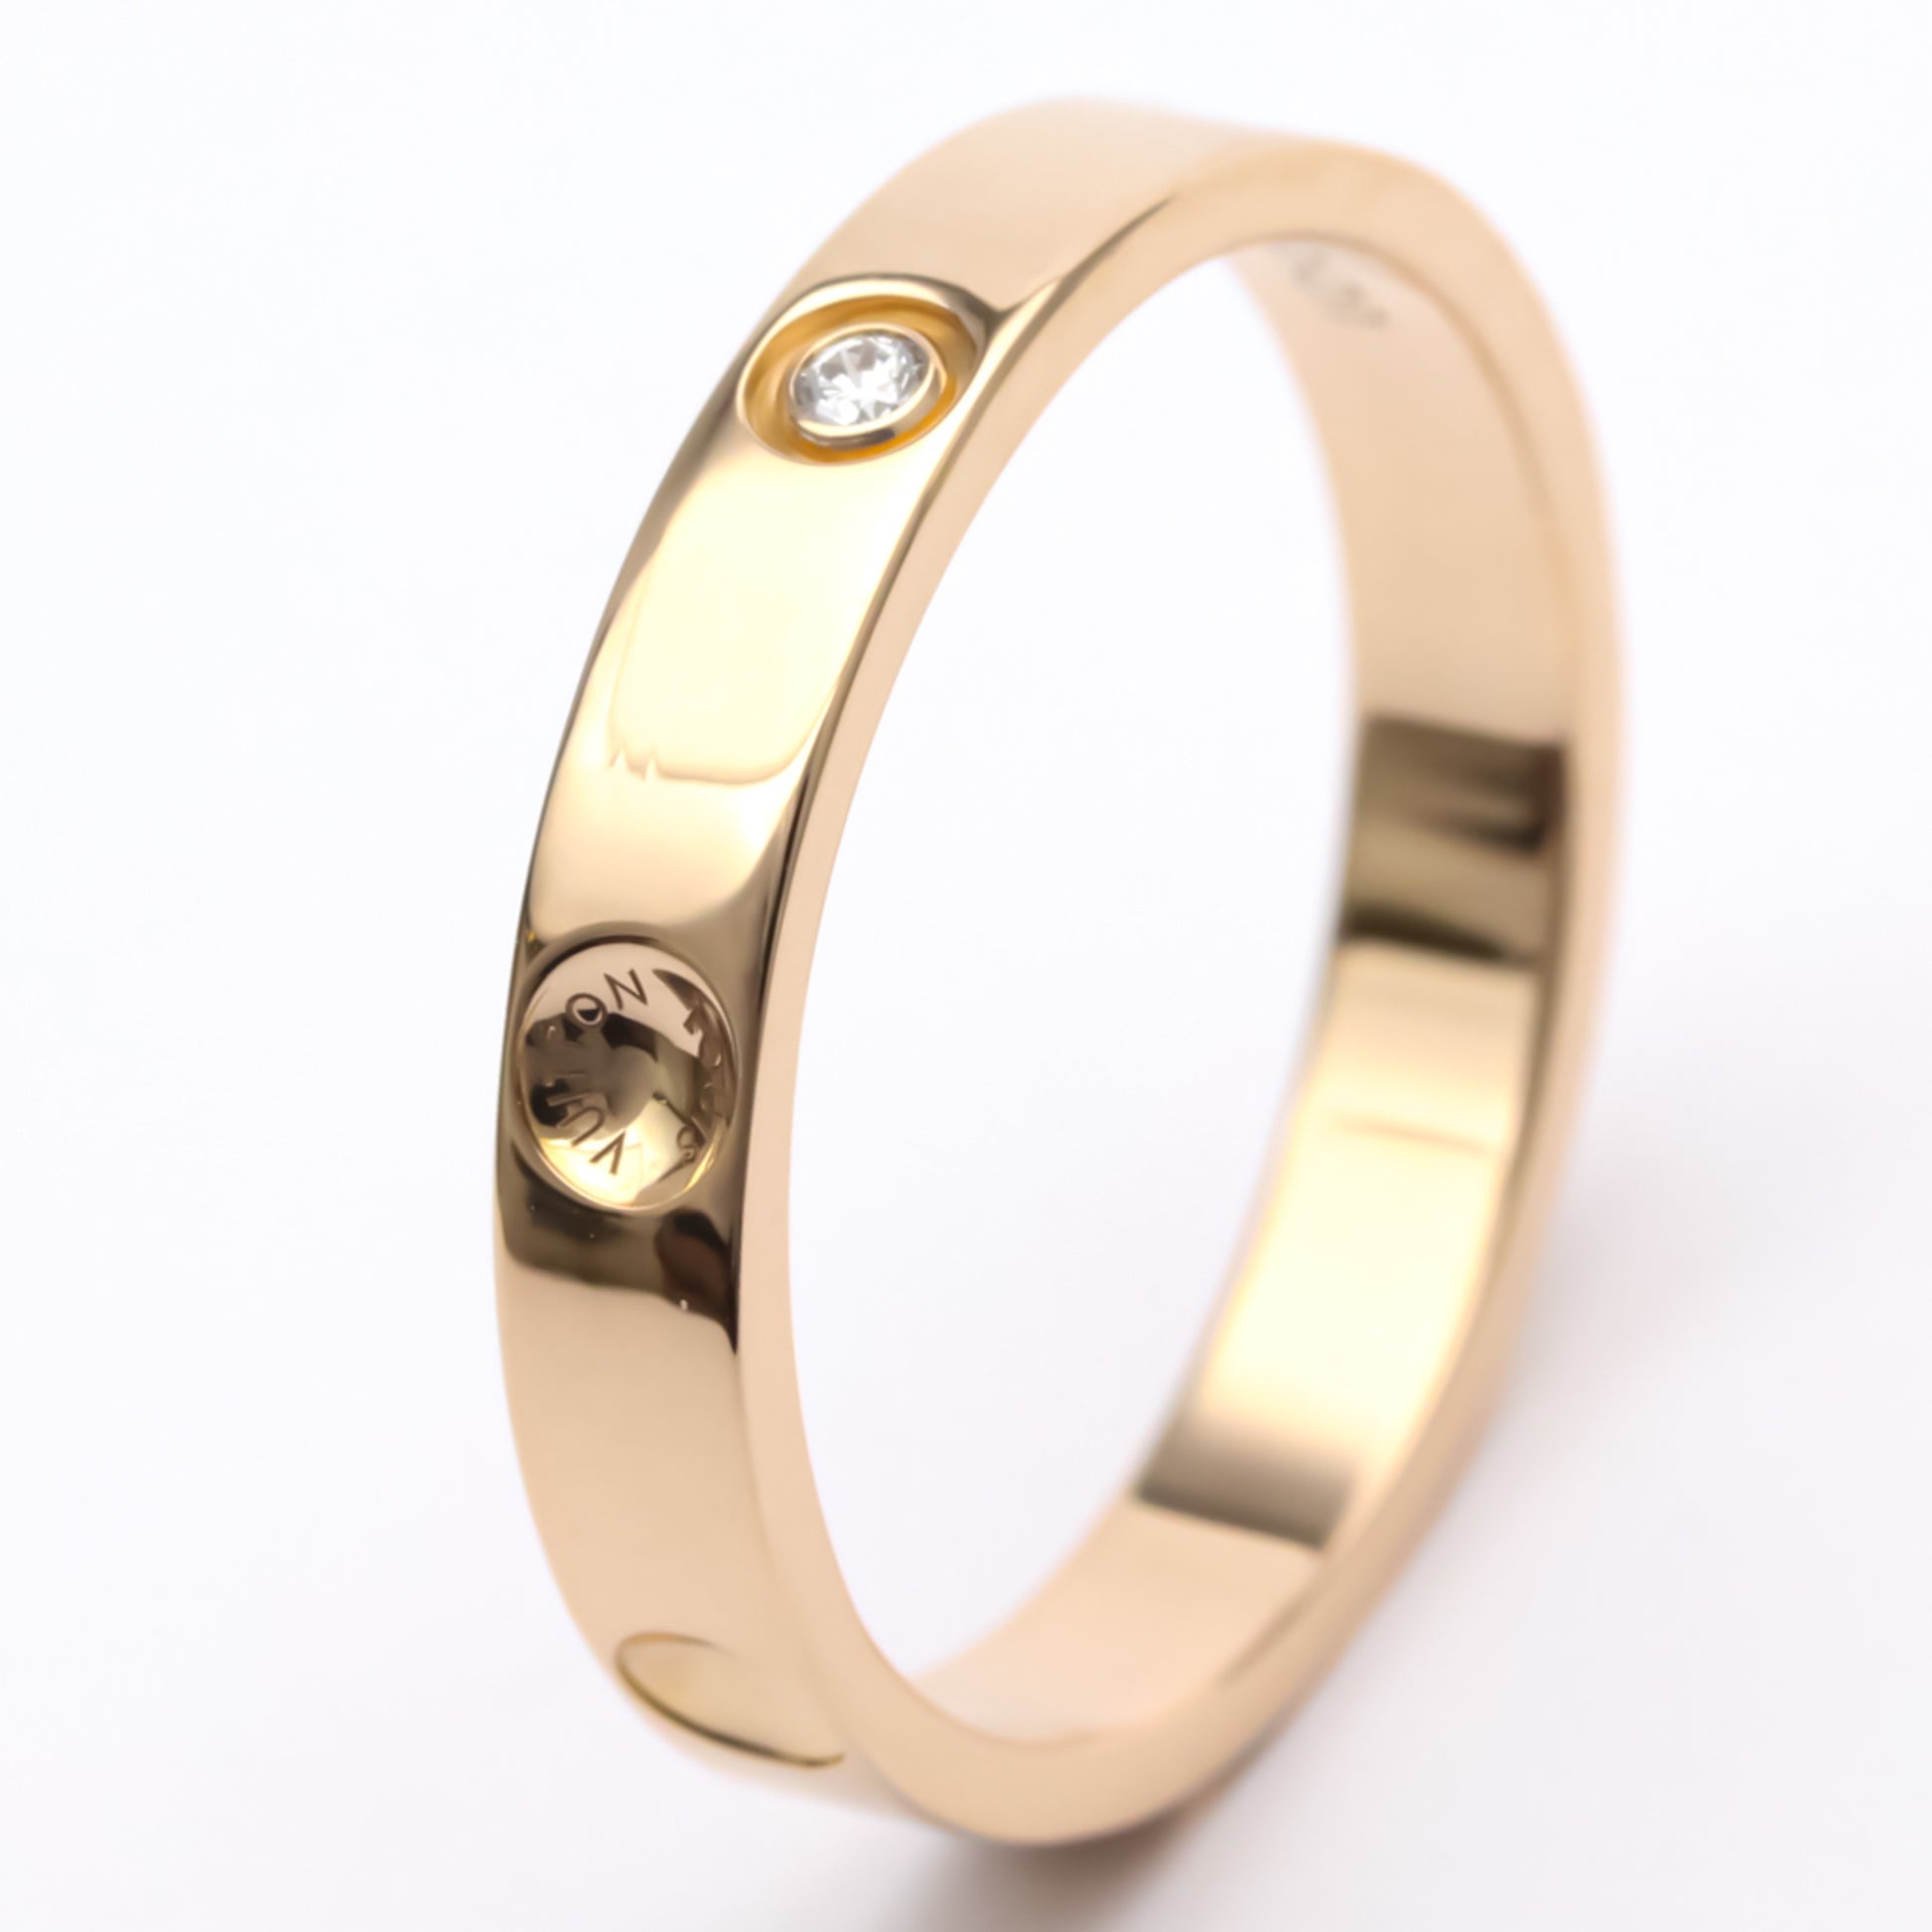 Polished LOUIS VUITTON Alliance Emplant #58 Diamond Ring 18K